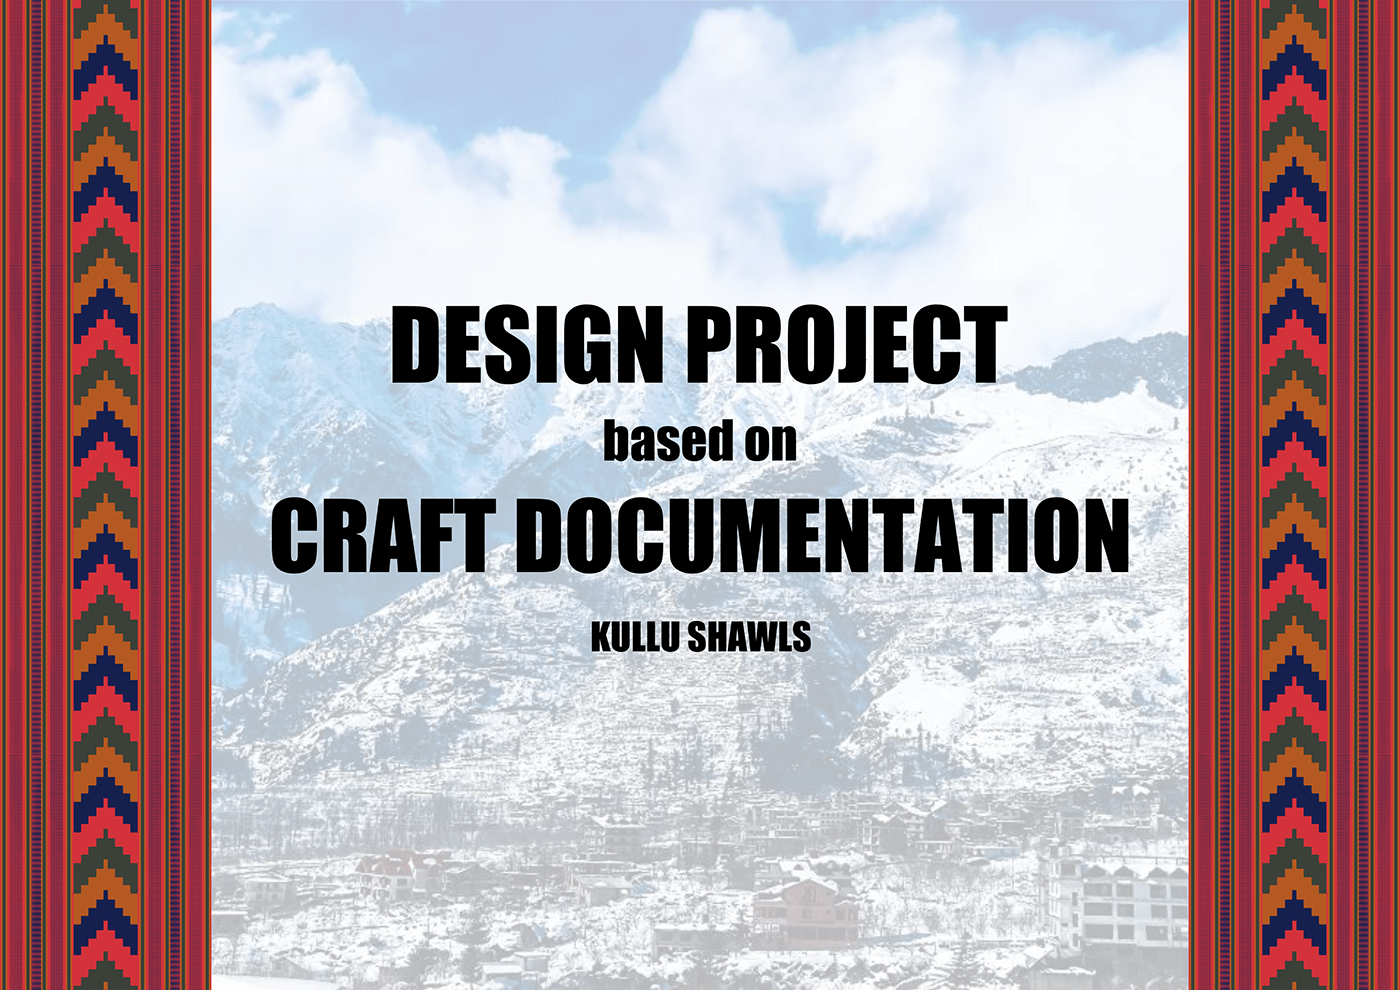 Design Project fashion design Craft documentation Craft based project fashion illustration KULLU SHAWLS